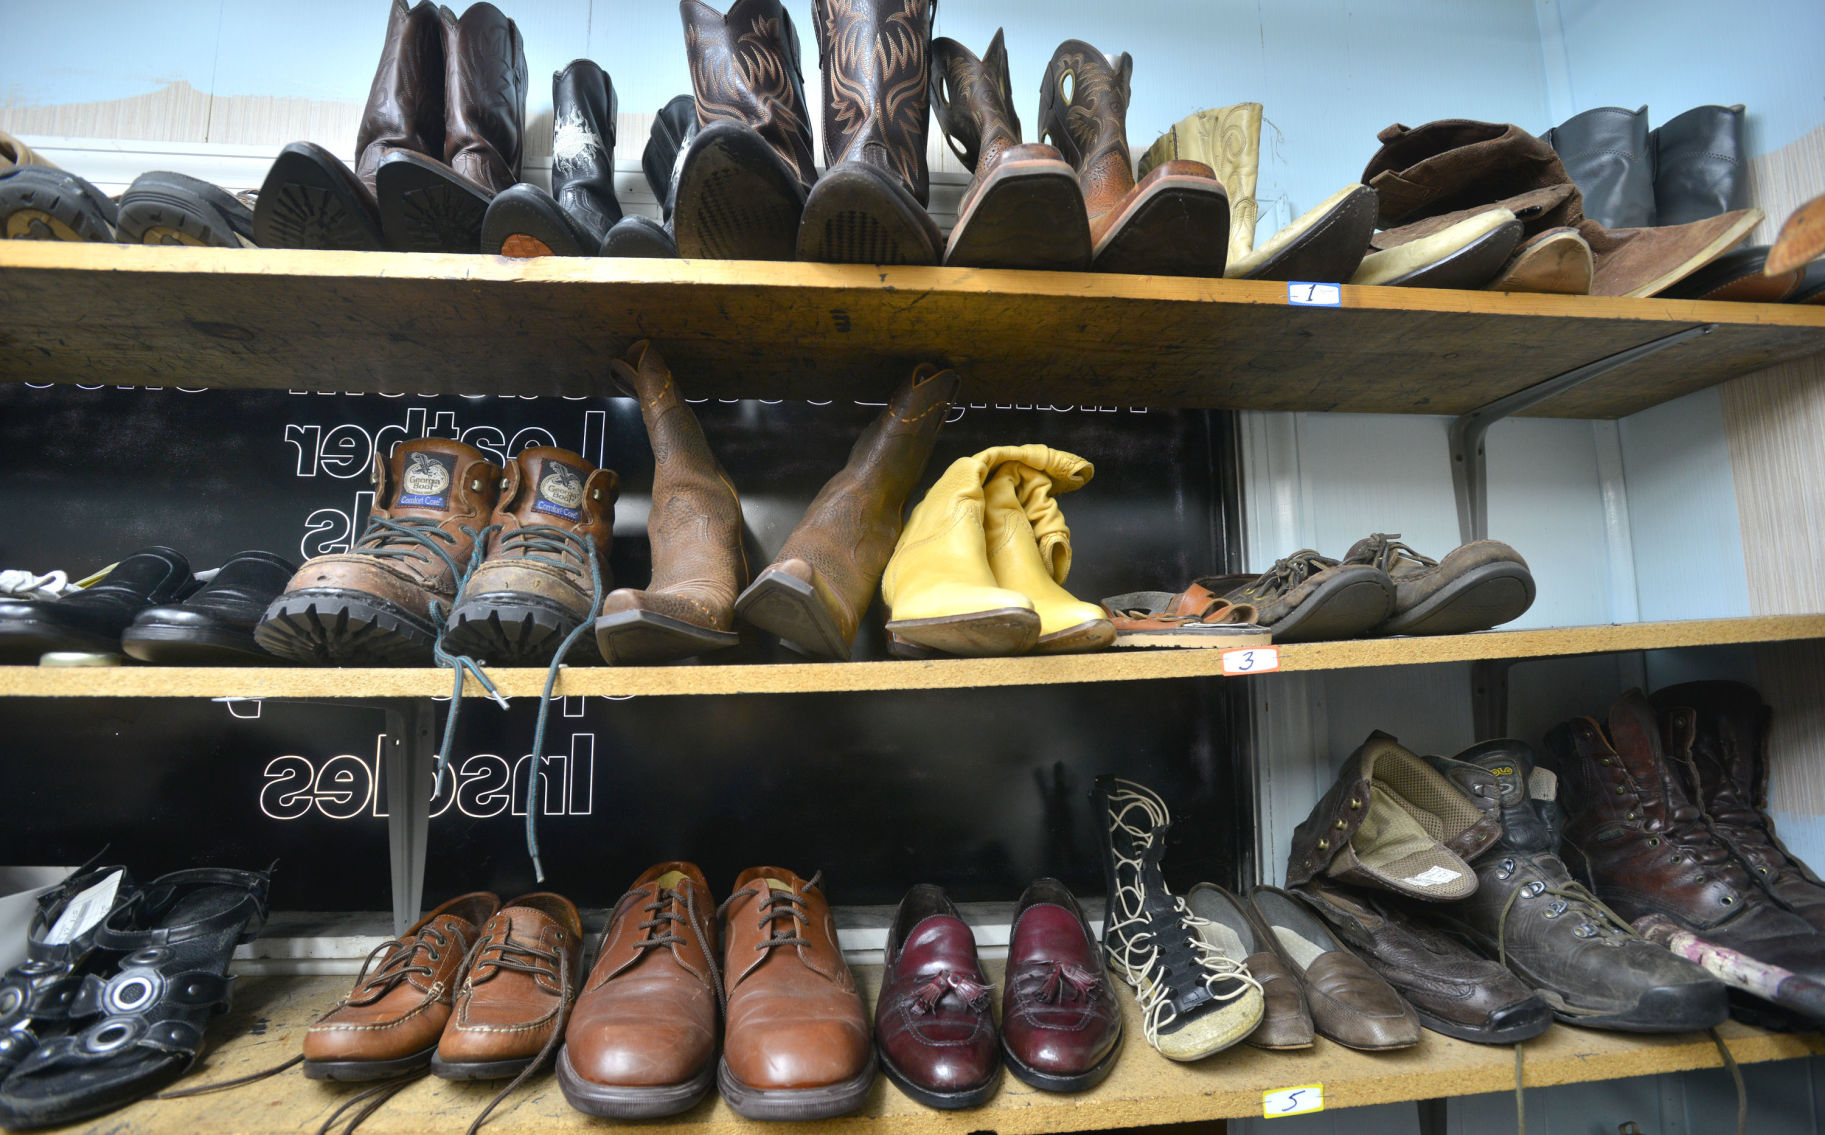 Bristol shoe repair business closes on 